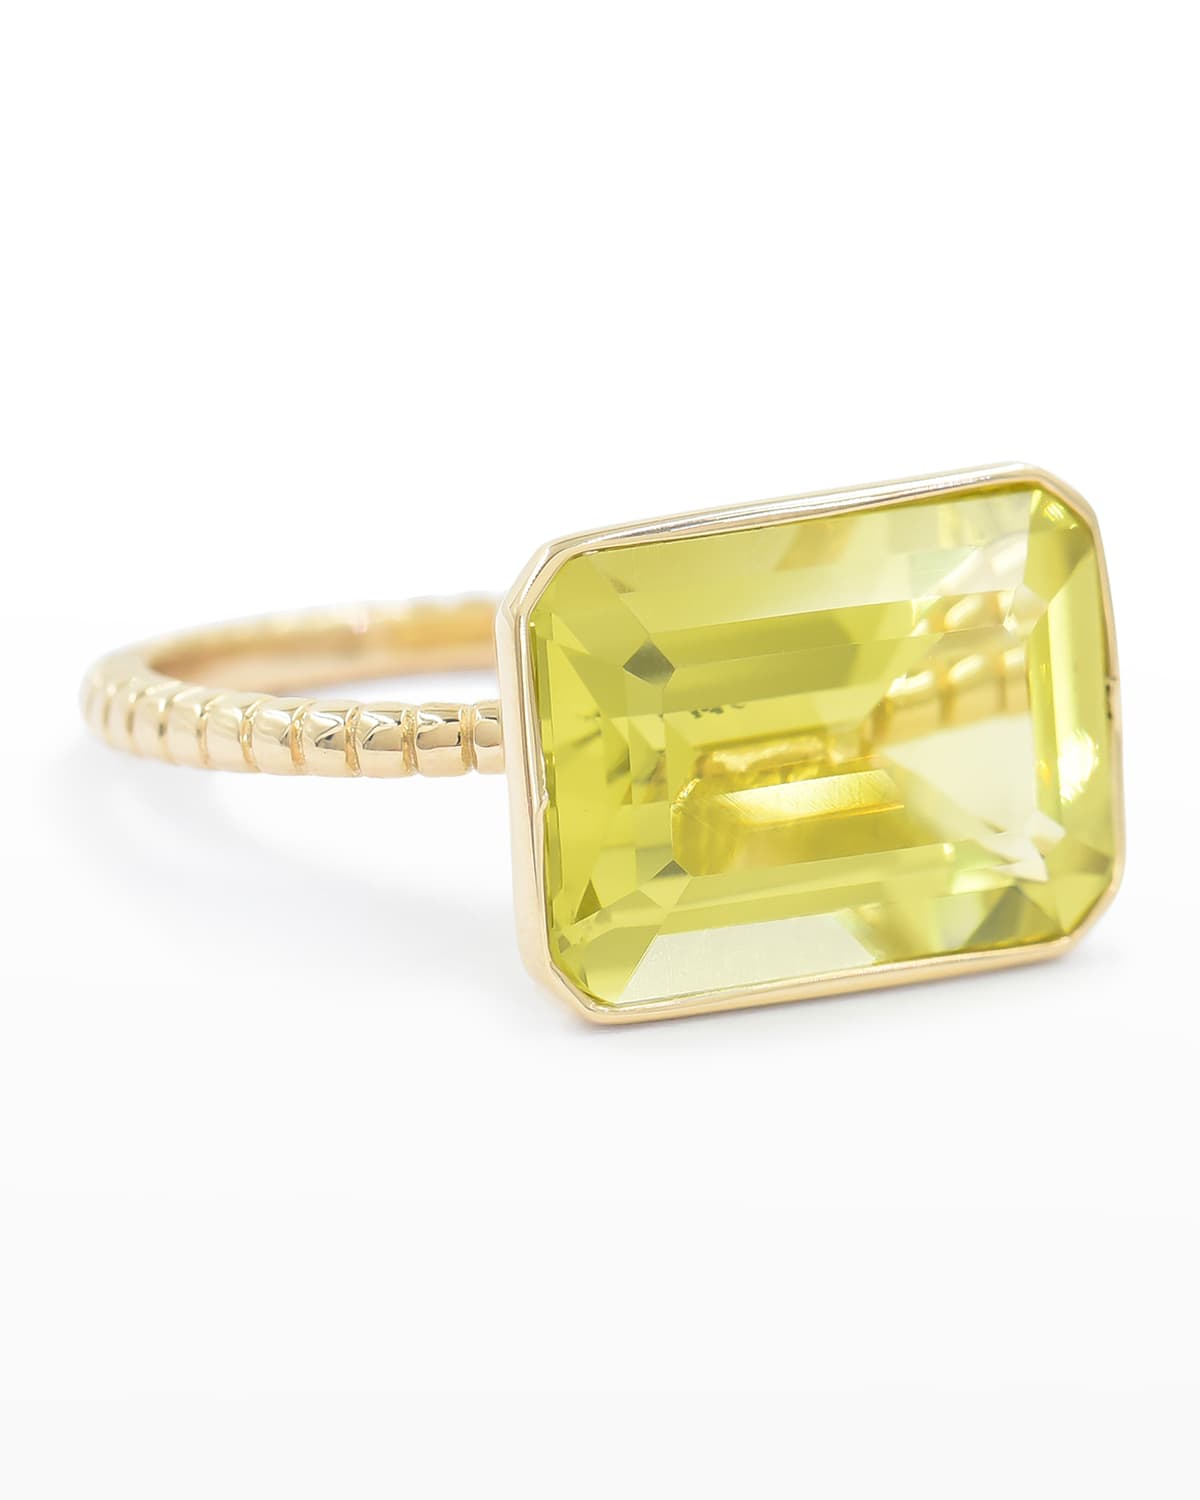 BONDEYE JEWELRY Emerald-Cut Jollie Ring